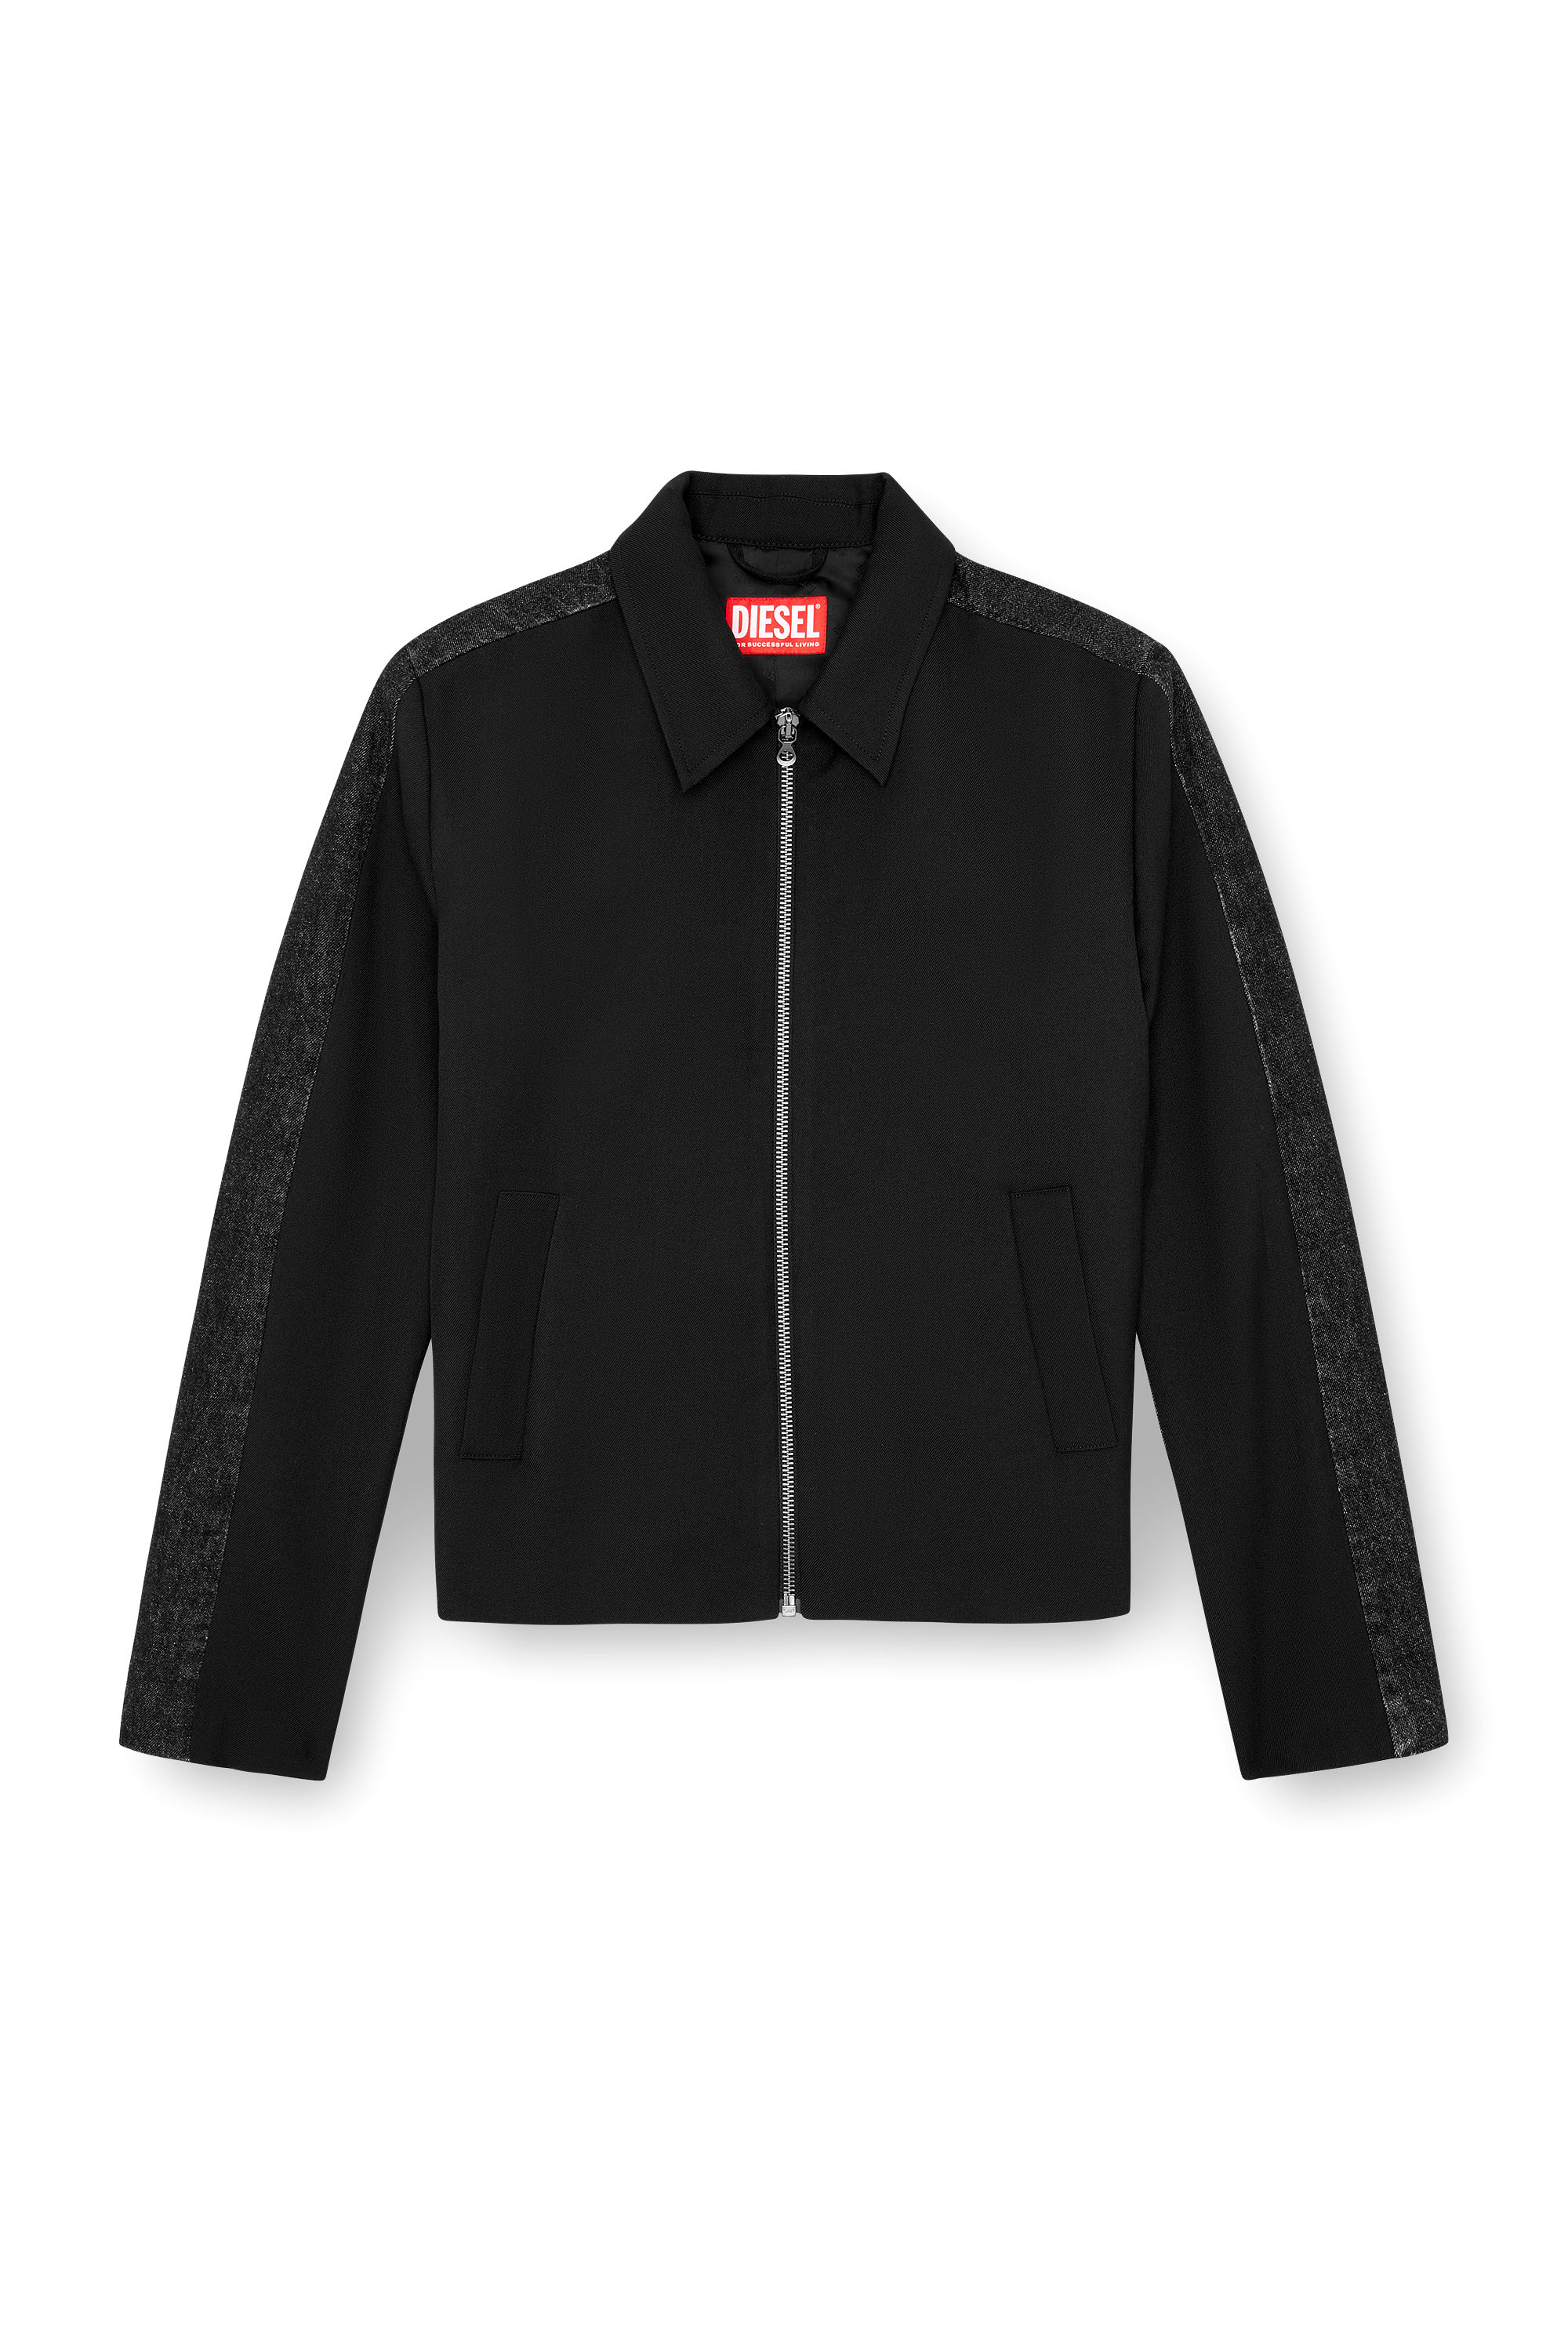 Diesel - J-RHEIN, Male Blouson jacket in wool blend and denim in ブラック - Image 3